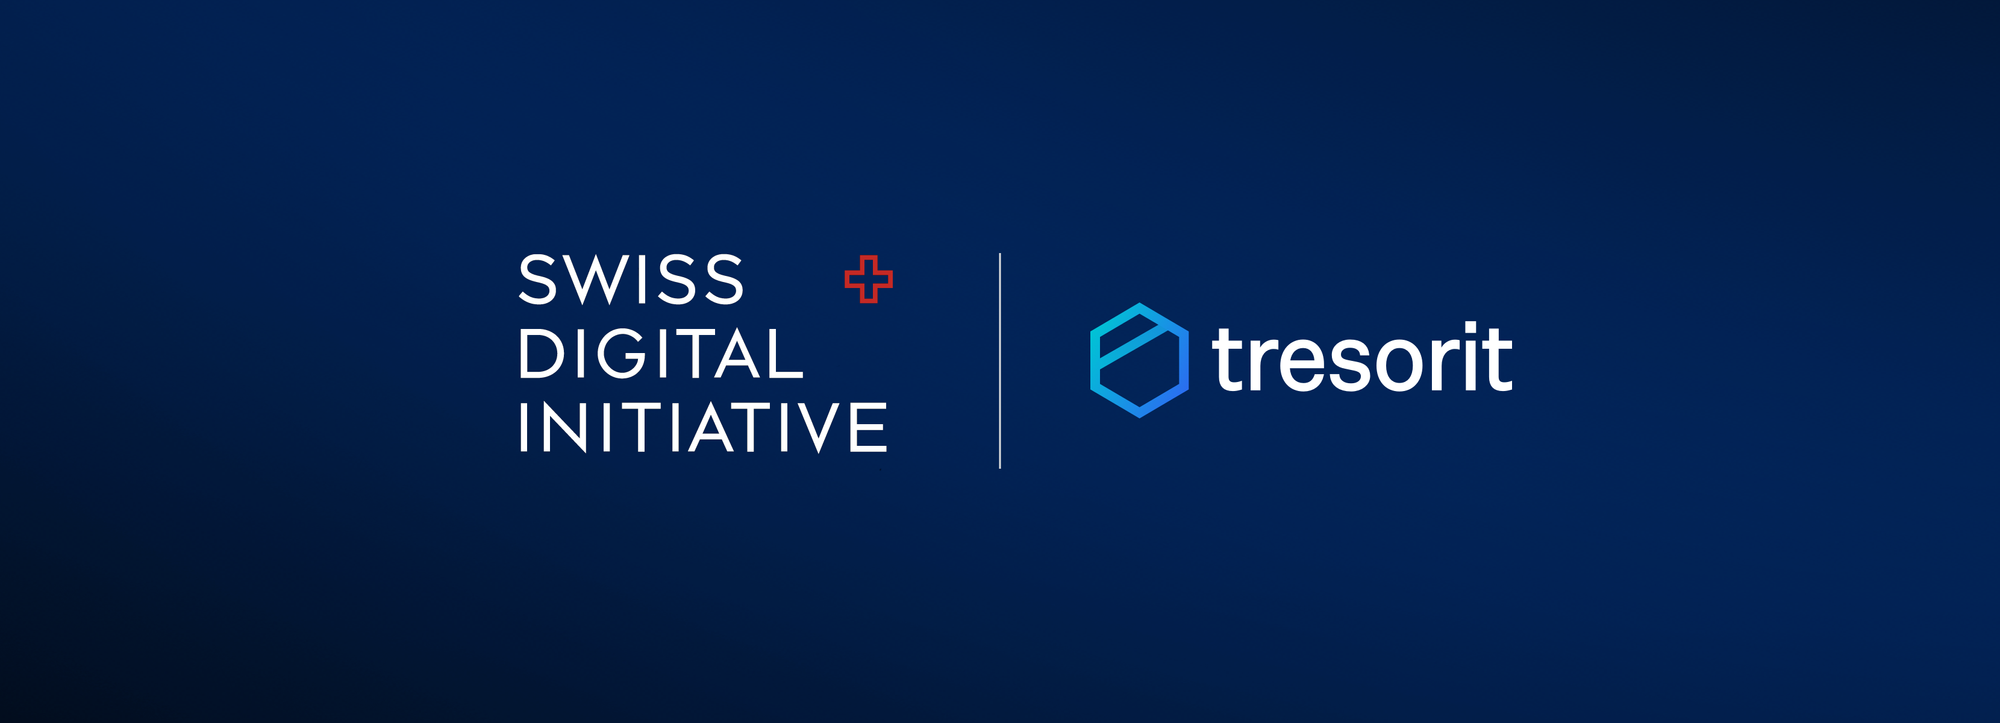 Tresorit and Swiss Digital Initiative logos